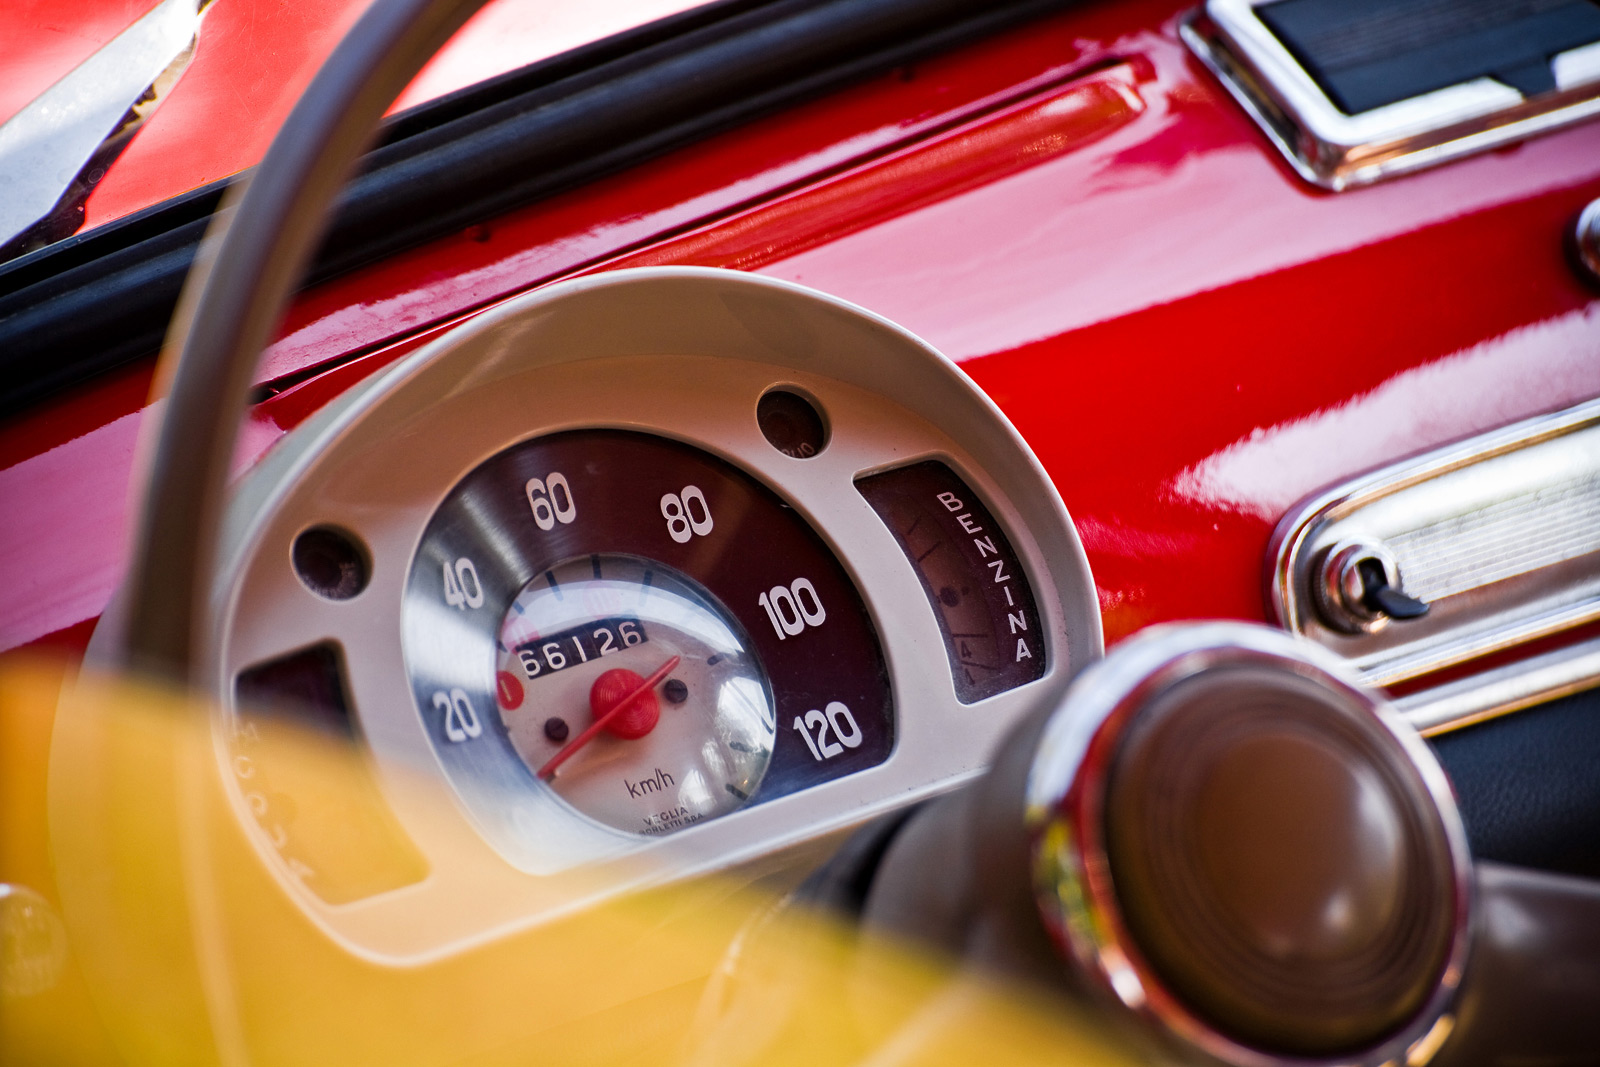 indicators and speedo inside the classic italian car Fiat 600